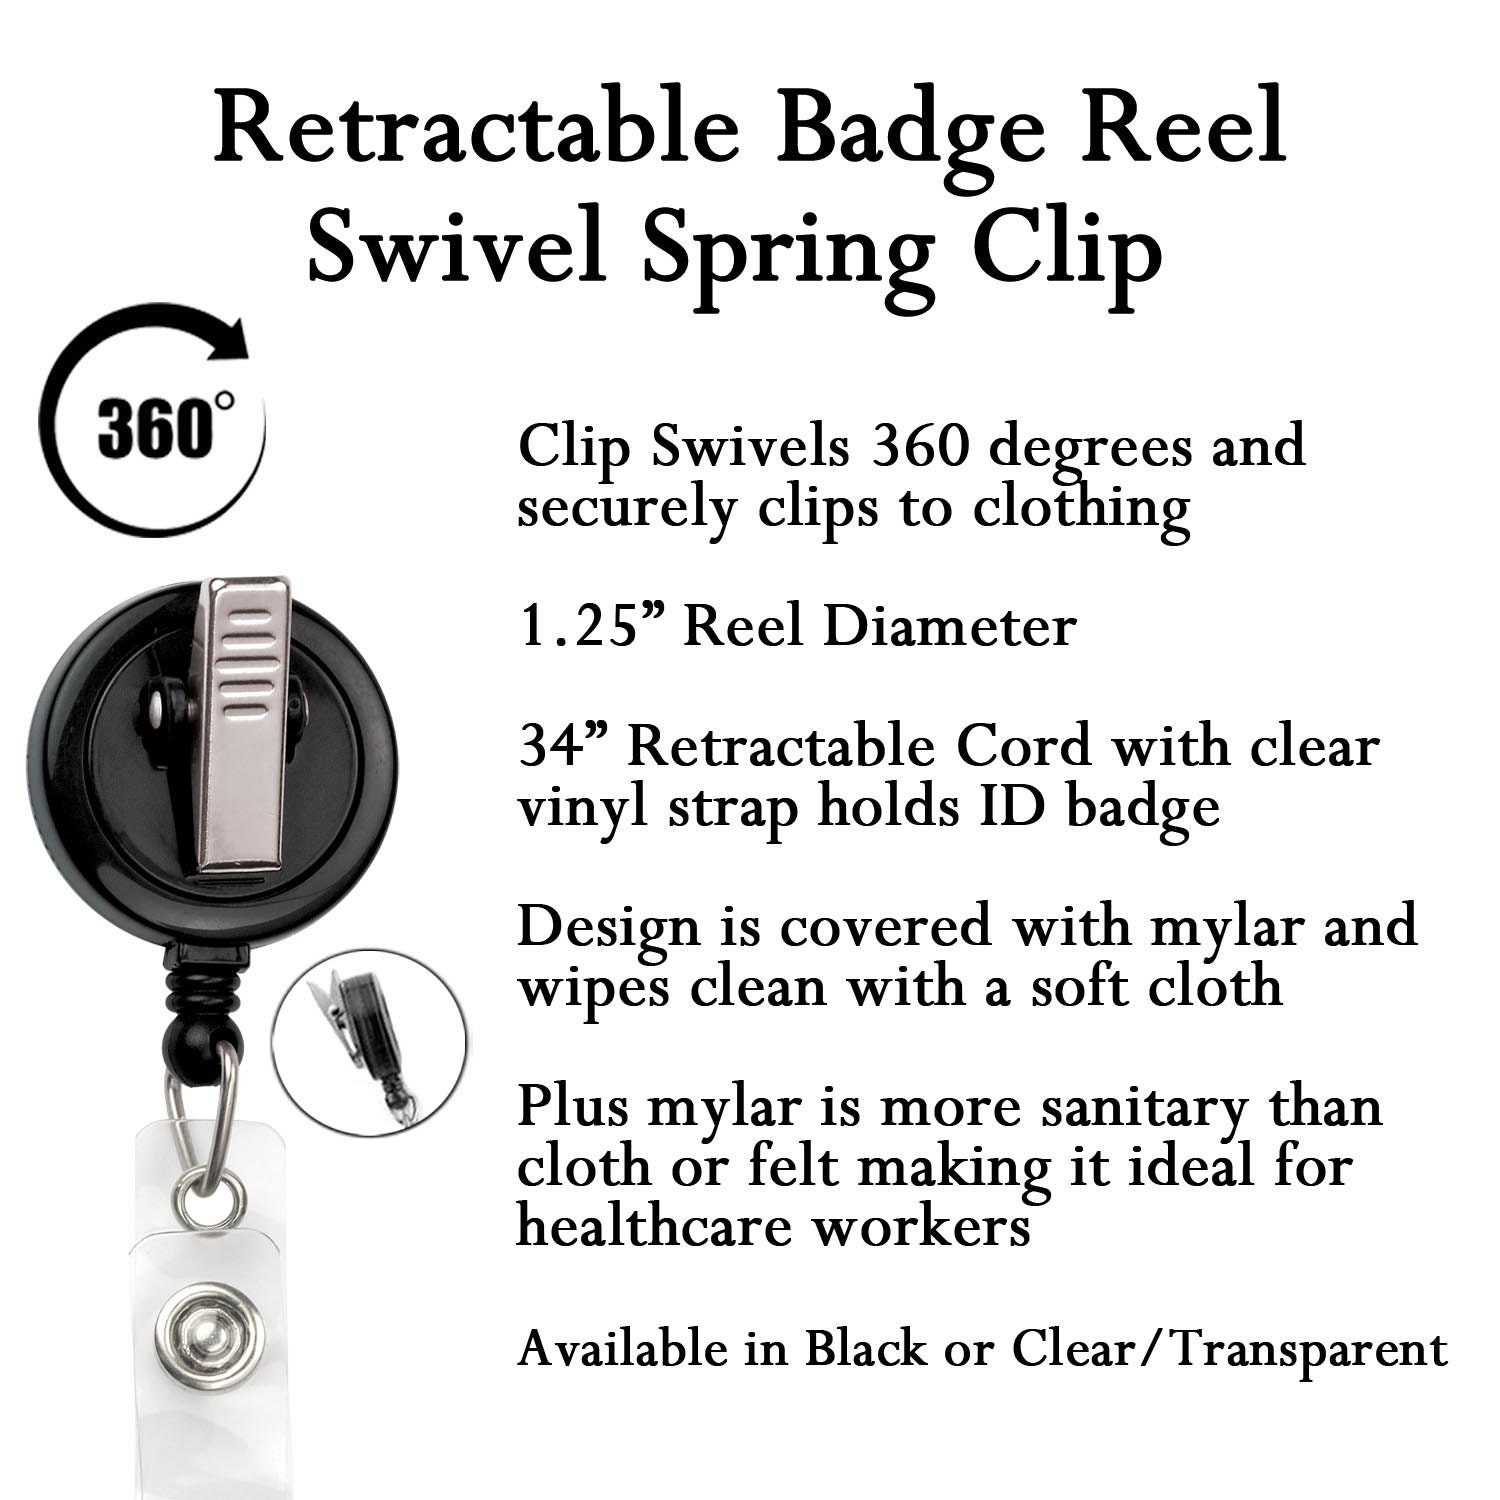 Animal Print Beads Interchangeable Badge Reel Silicone Beads 